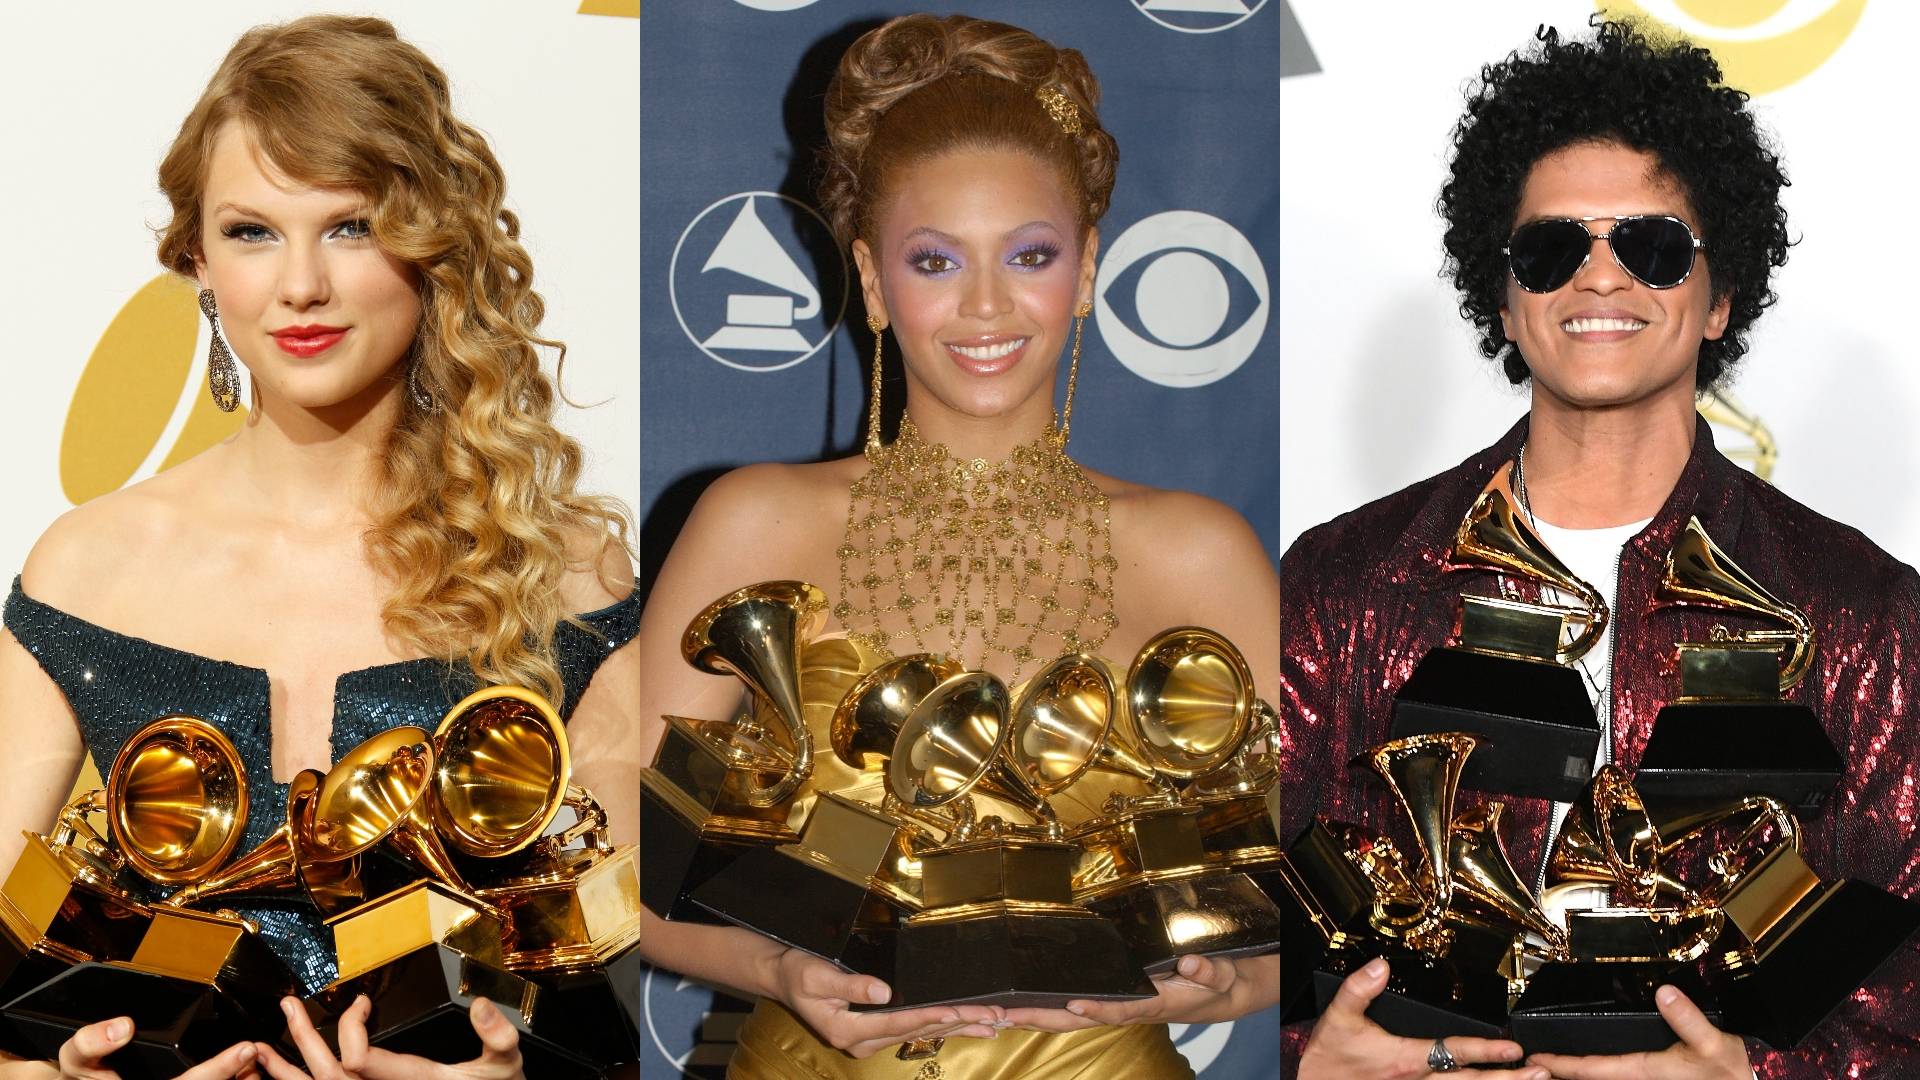 46th Annual Grammy Awards - Wikipedia